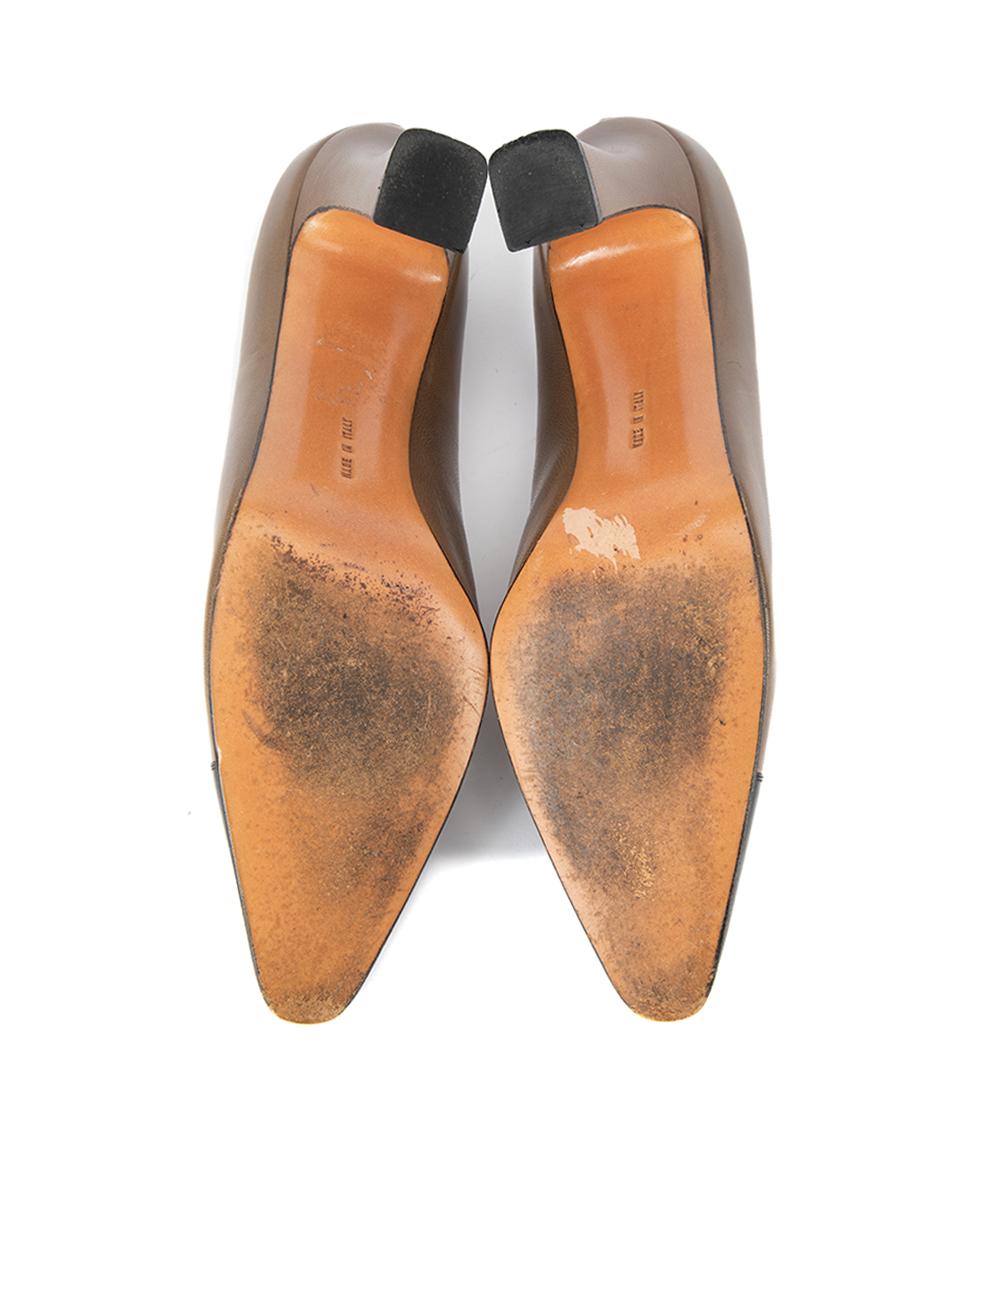 Salvatore Ferragamo Women's Brown Leather Pointed Toe Cap Pumps For Sale 1